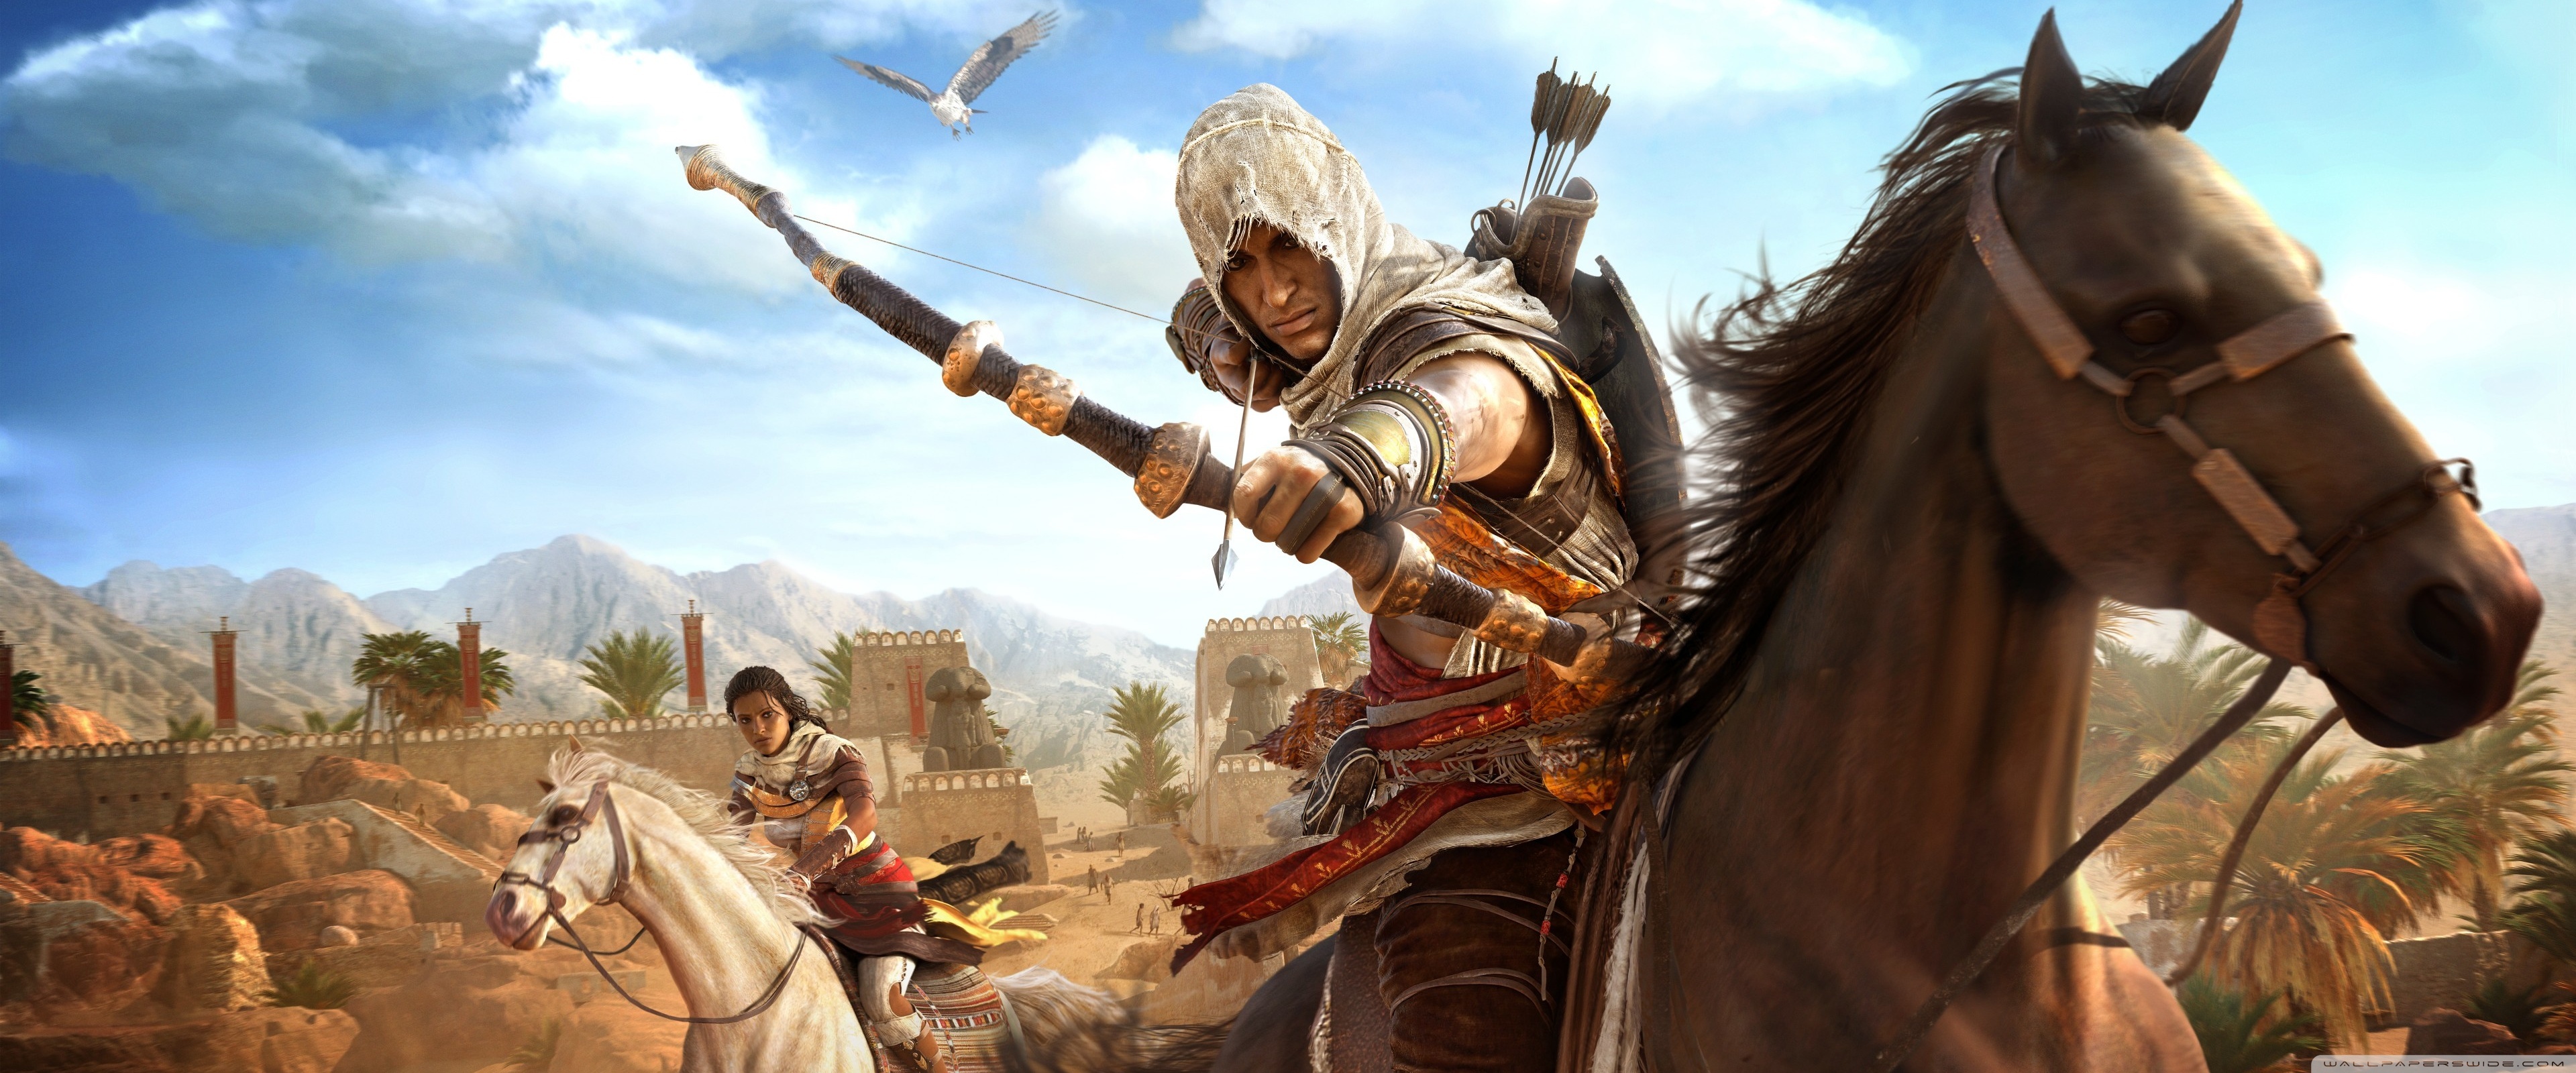 Assasin Creed Origins - HD Wallpaper 